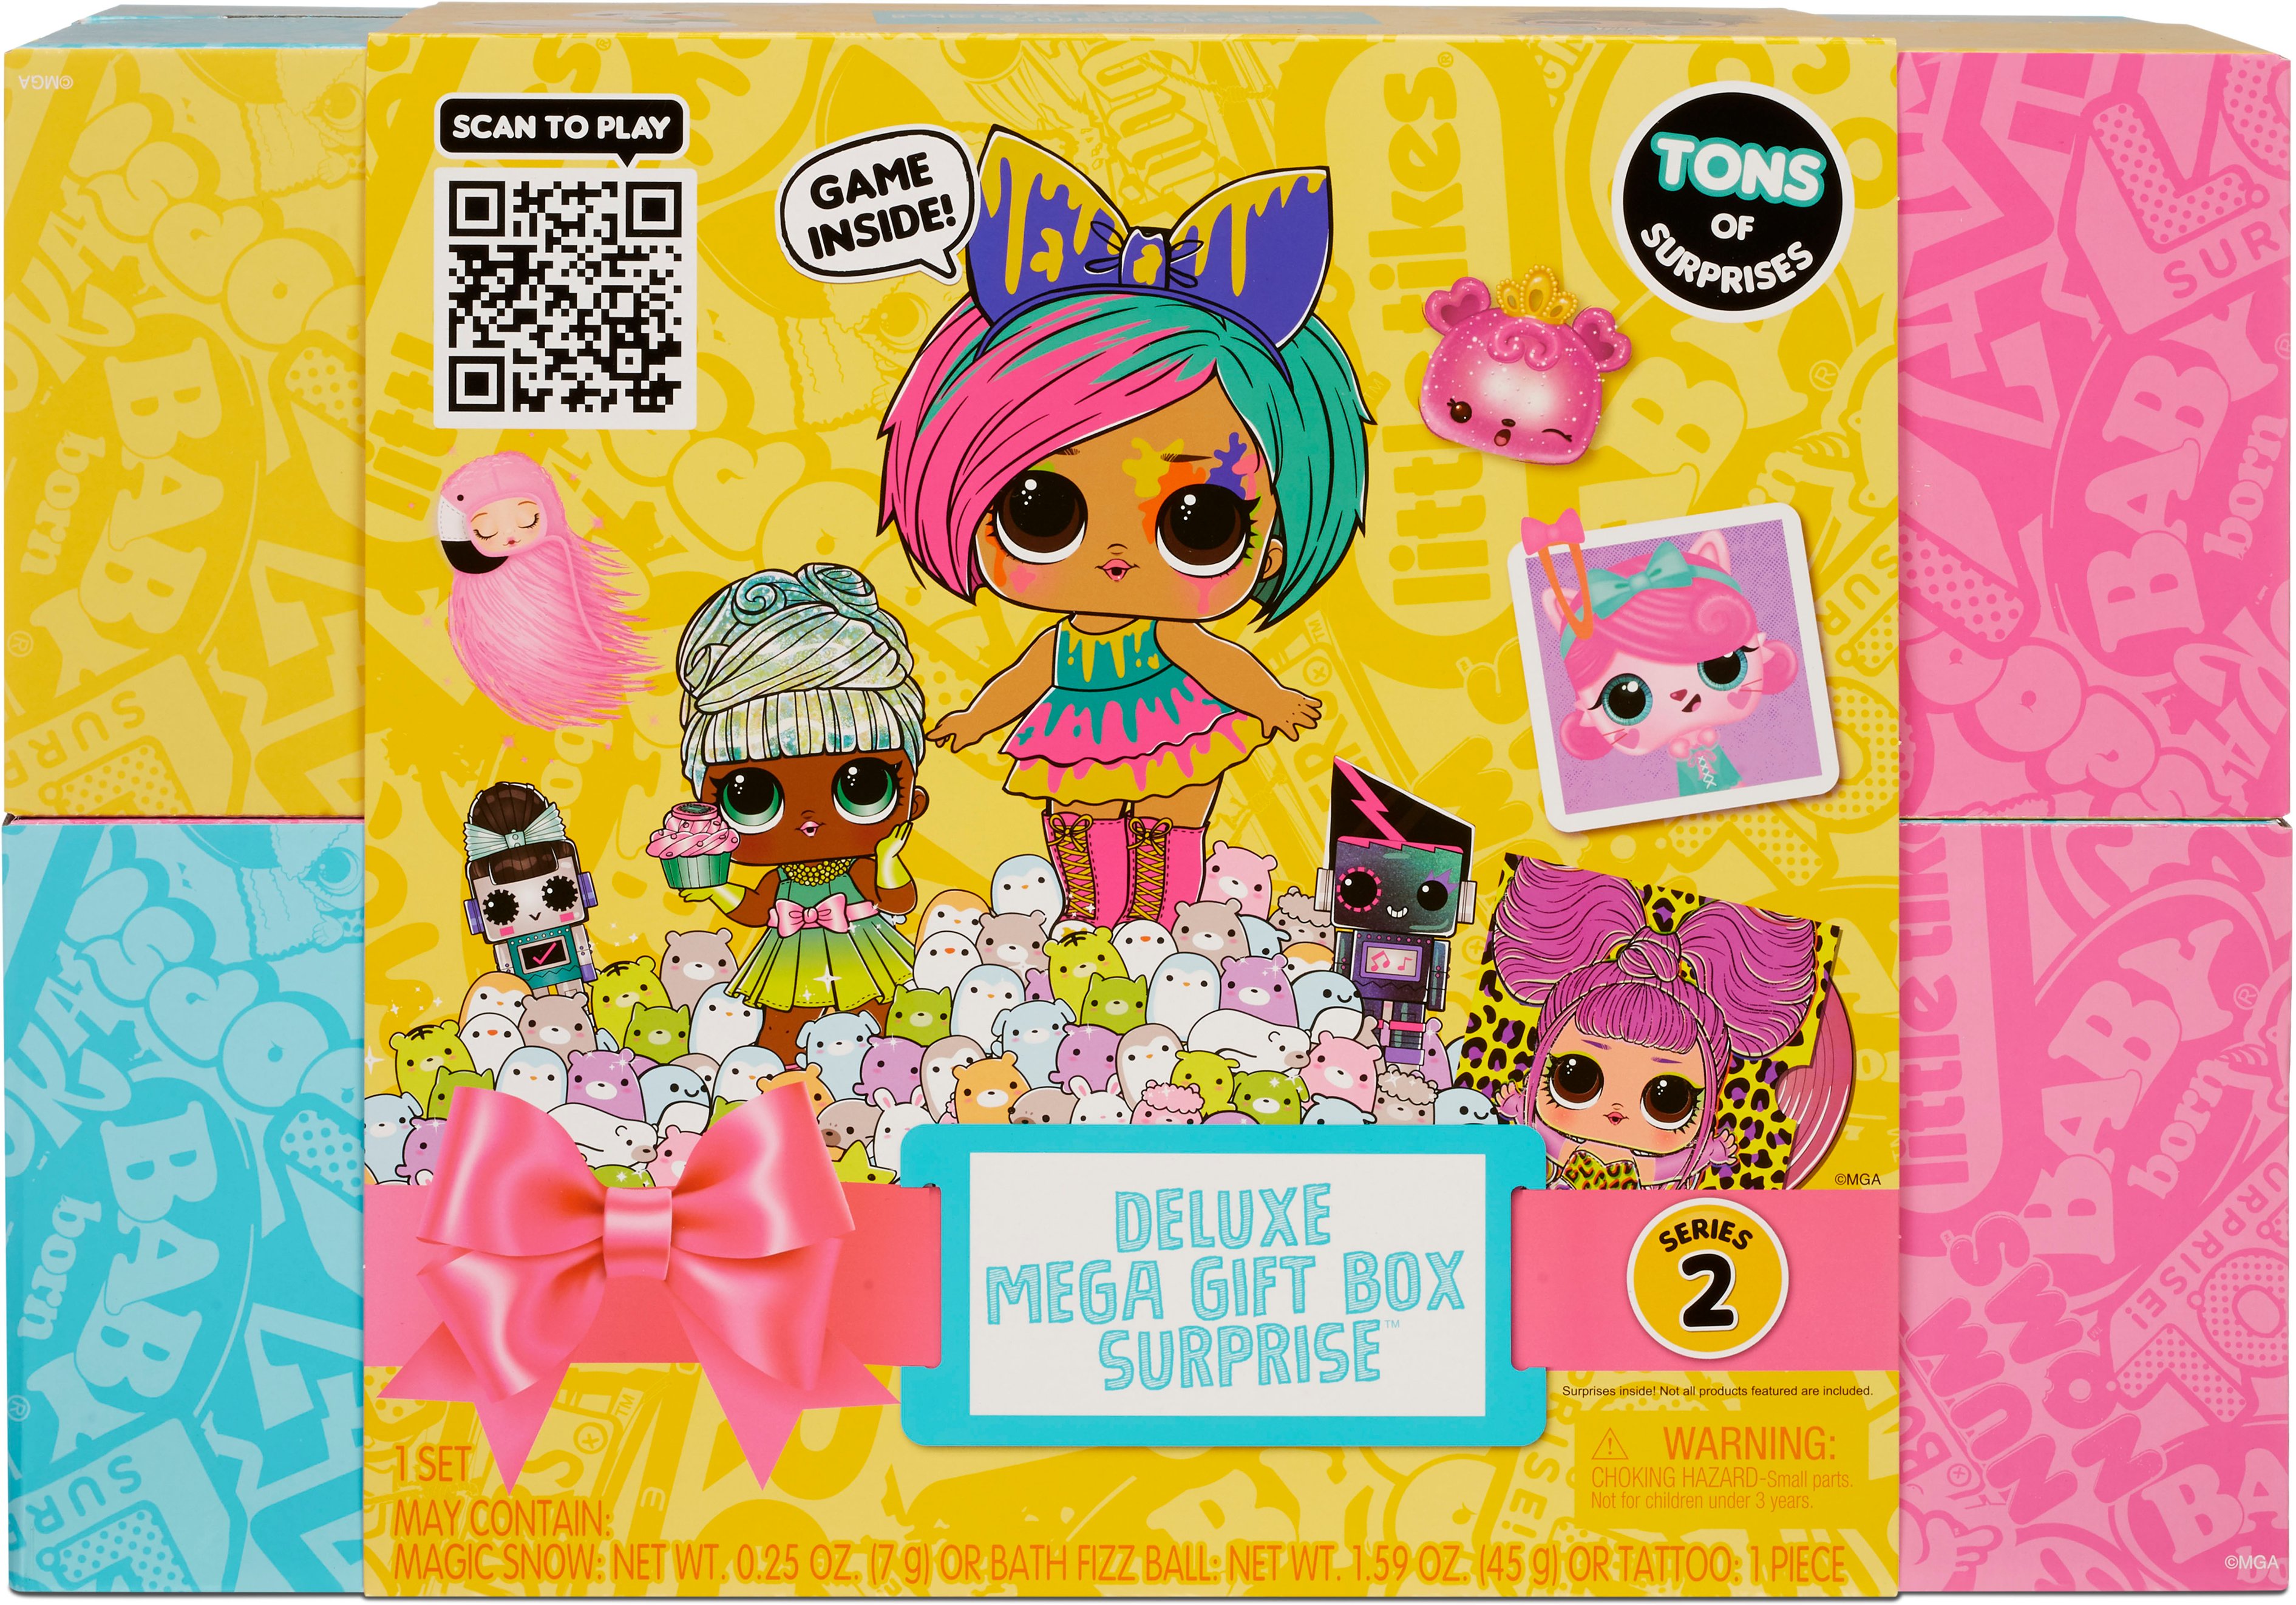 Deluxe mega gift box surprise metro karta skachat